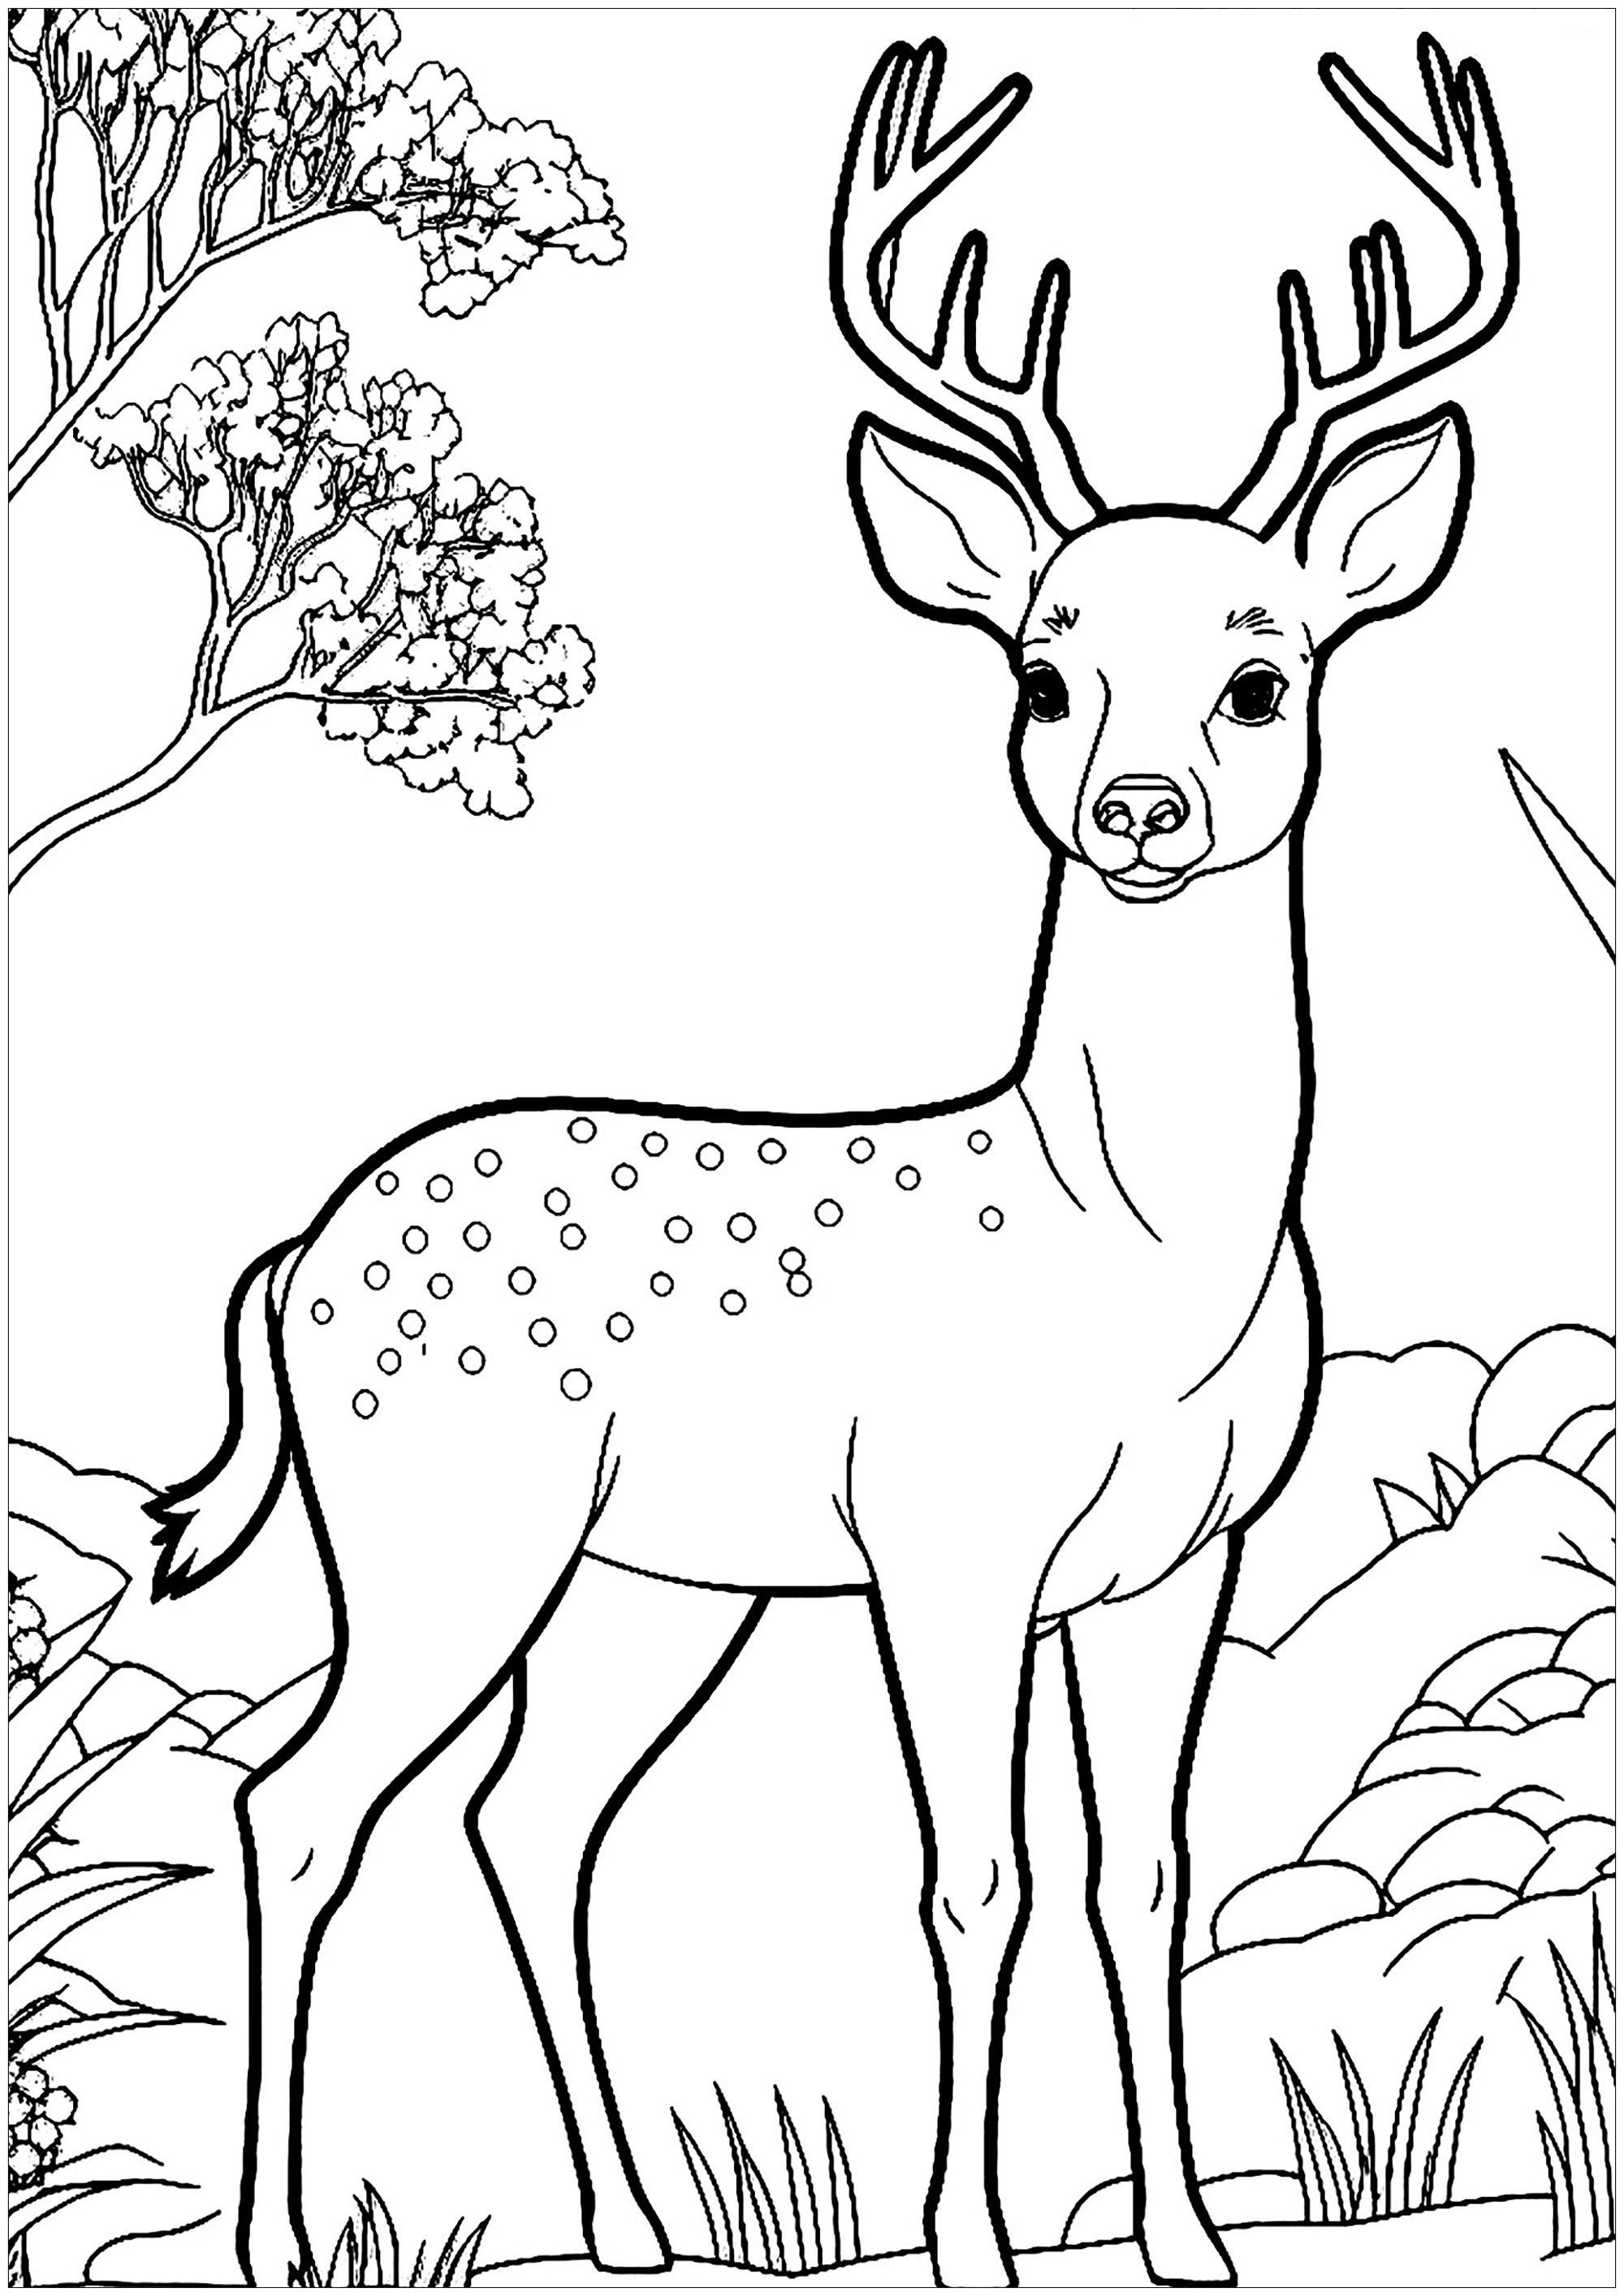 Pretty Deer to color, very simple